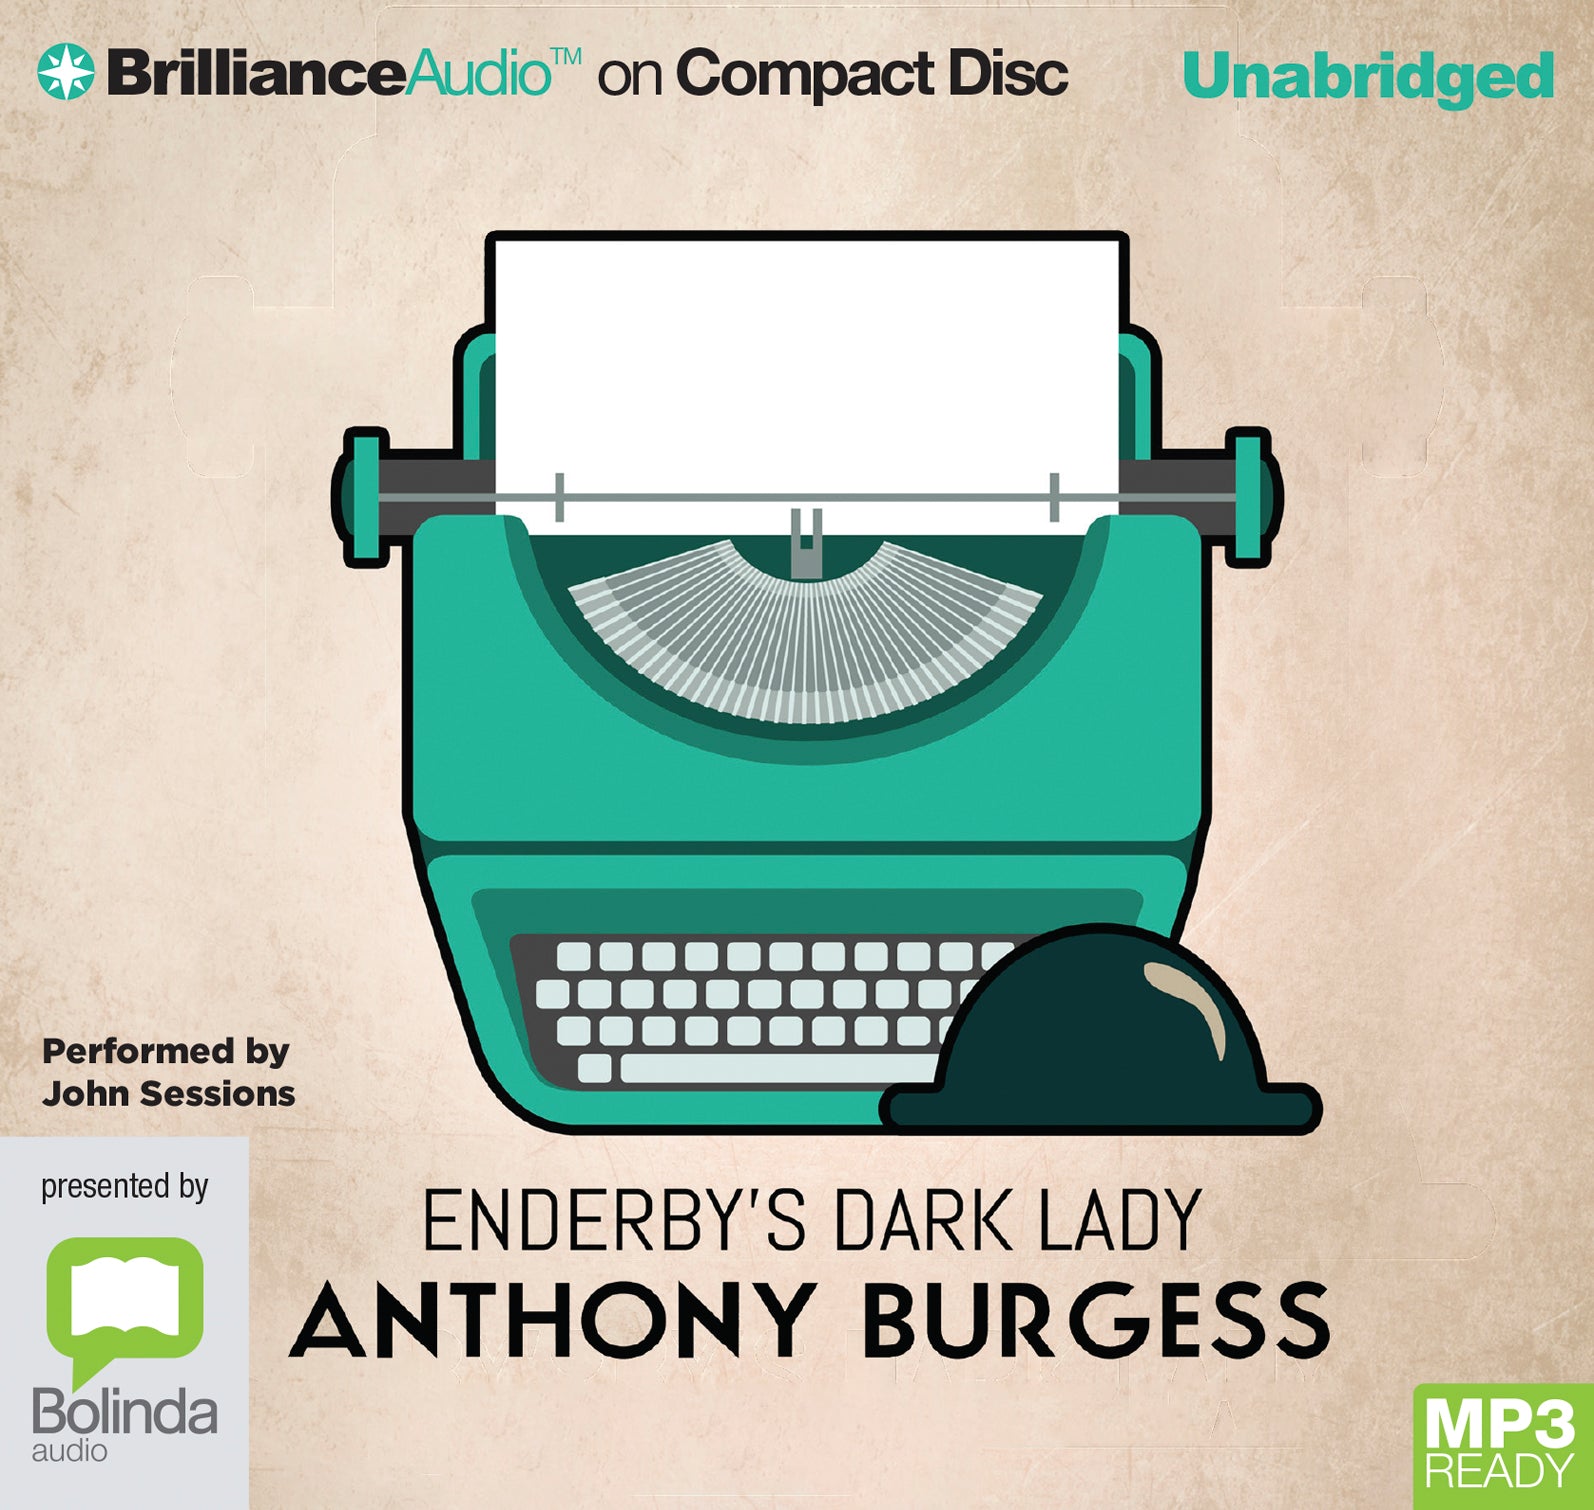 Enderby's Dark Lady  - Unbridged Audio Book on MP3